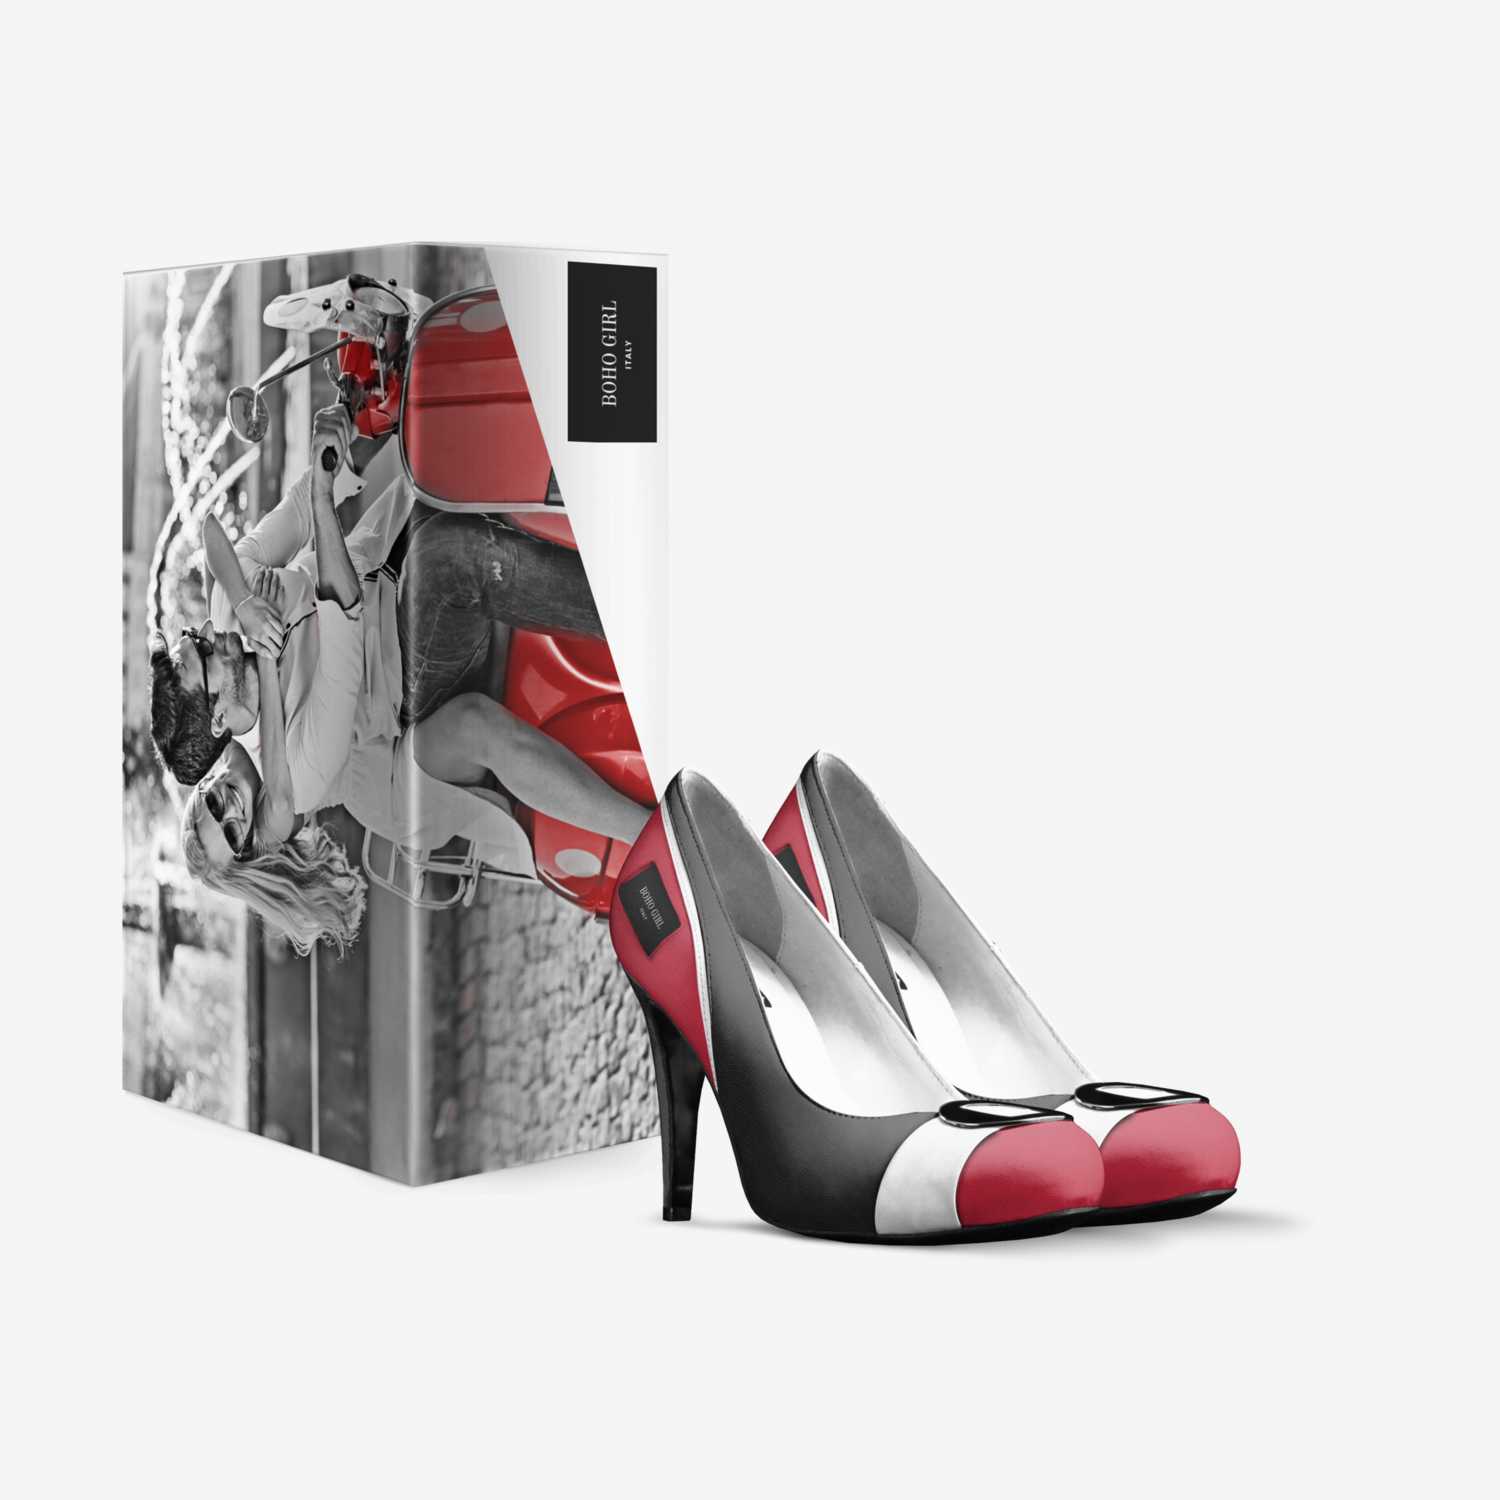 BOHO GIRL custom made in Italy shoes by Marijke Verkerk Design | Box view